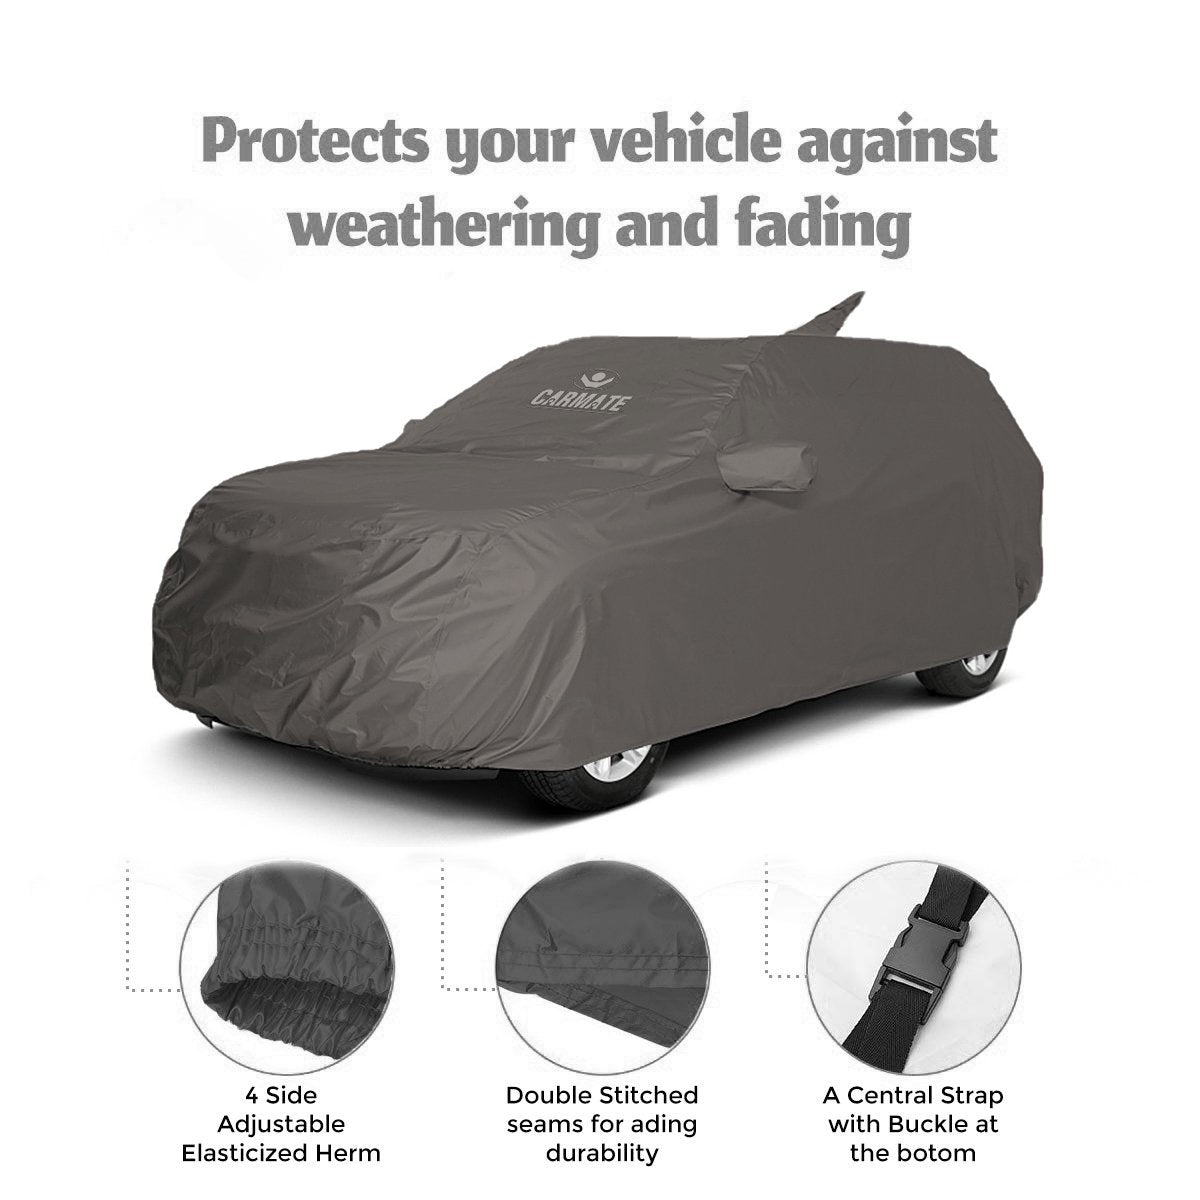 Carmate Car Body Cover 100% Waterproof Pride (Grey) for Chevrolet - Beat - CARMATE®